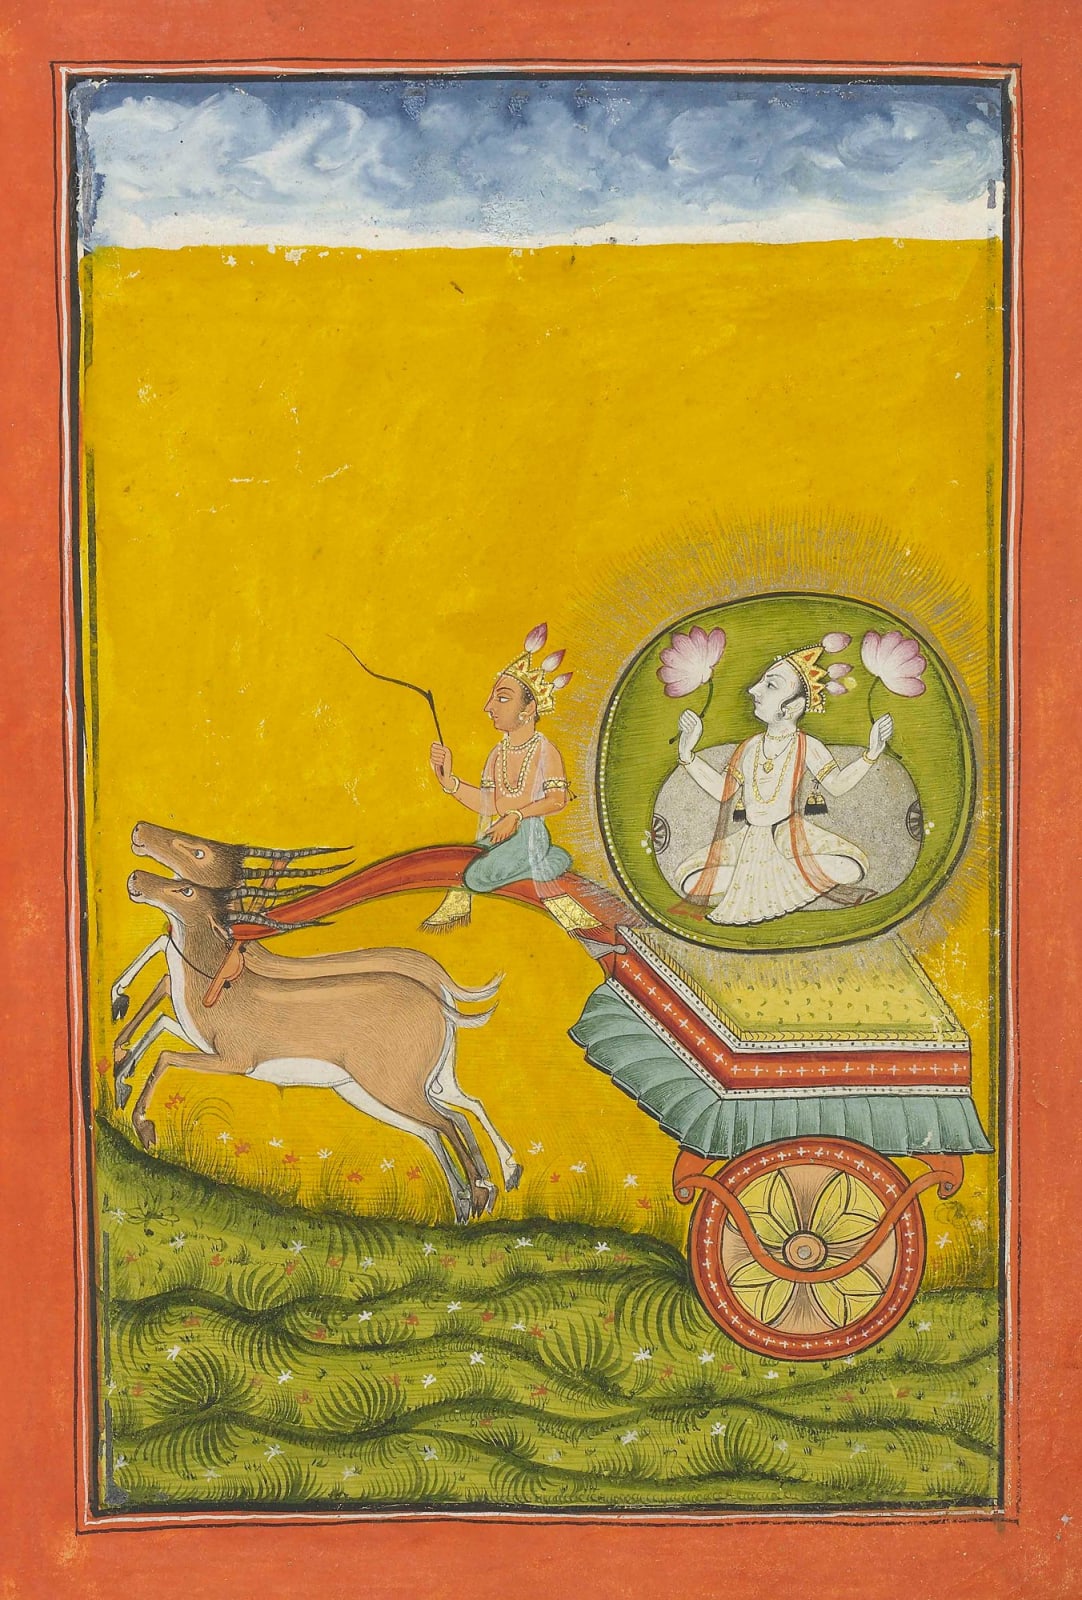 Bilaspur Raga, Folio 68, Chandra (Chariot), Bilaspur, 1700-20